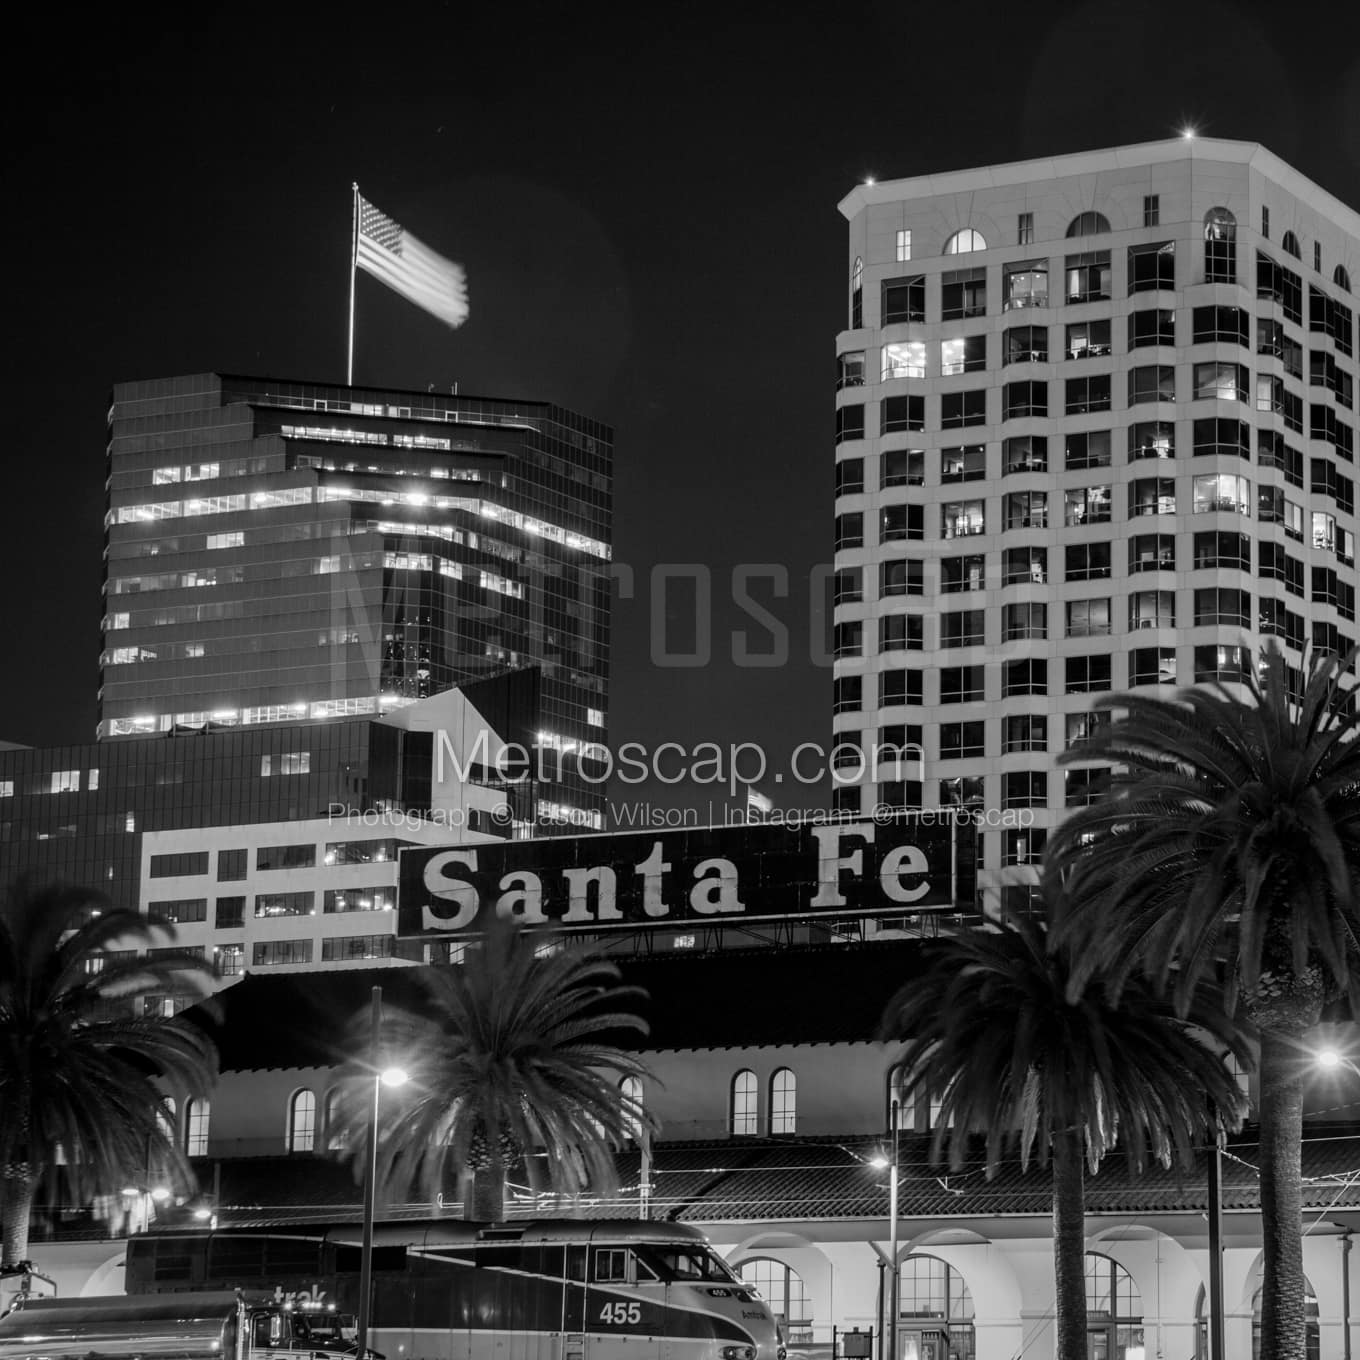 San Diego Black & White Landscape Photography